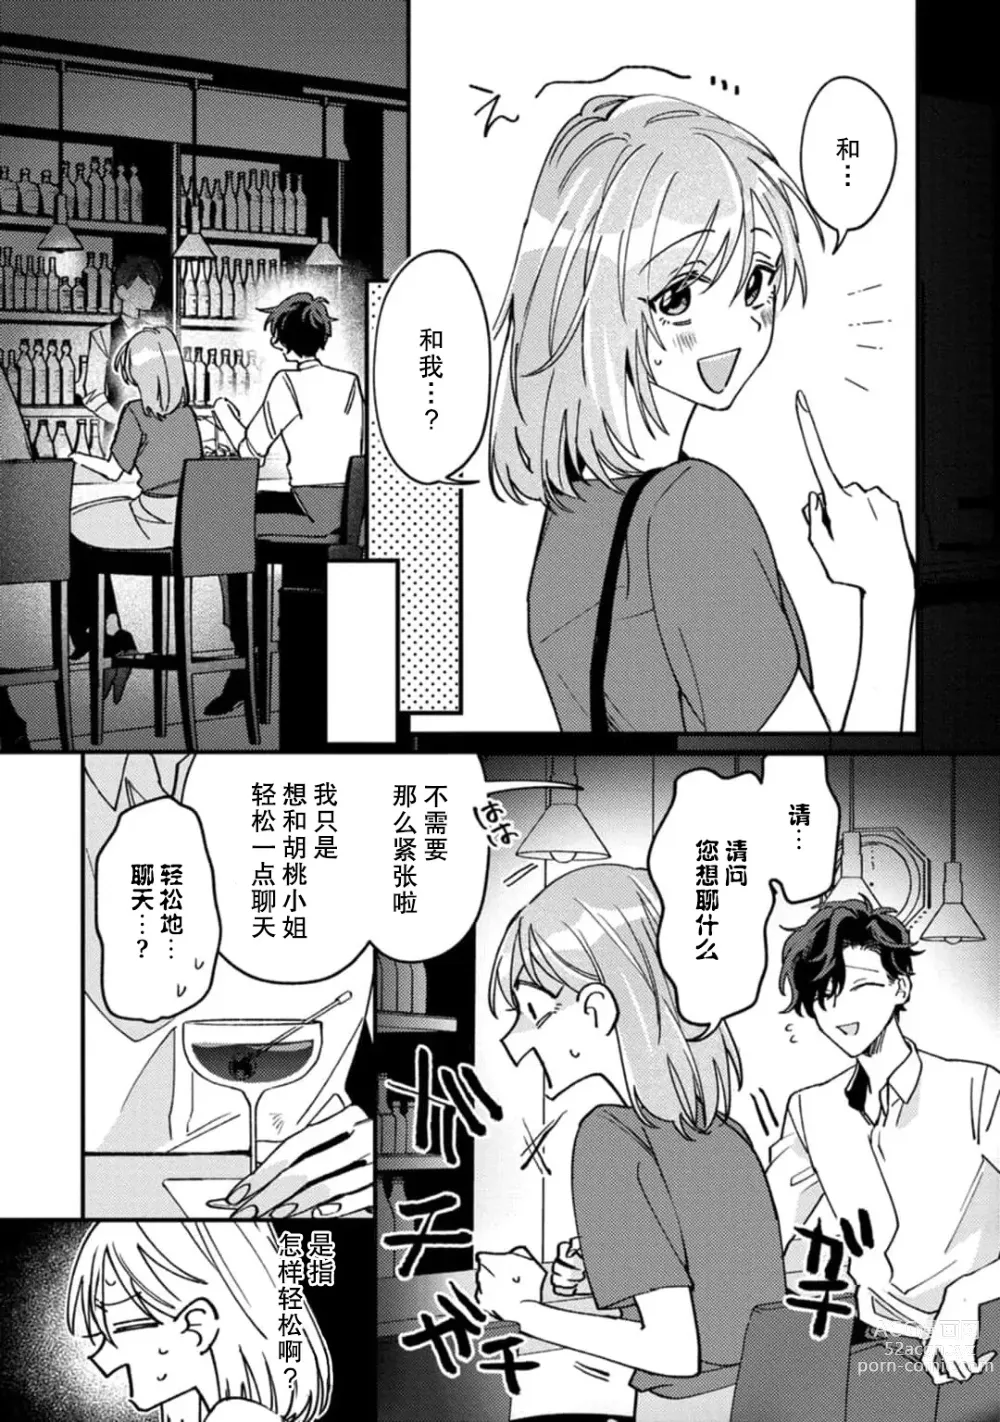 Page 22 of manga 请勿打扰！酒店客房服务员被常客绅士夺走第一次 1-3